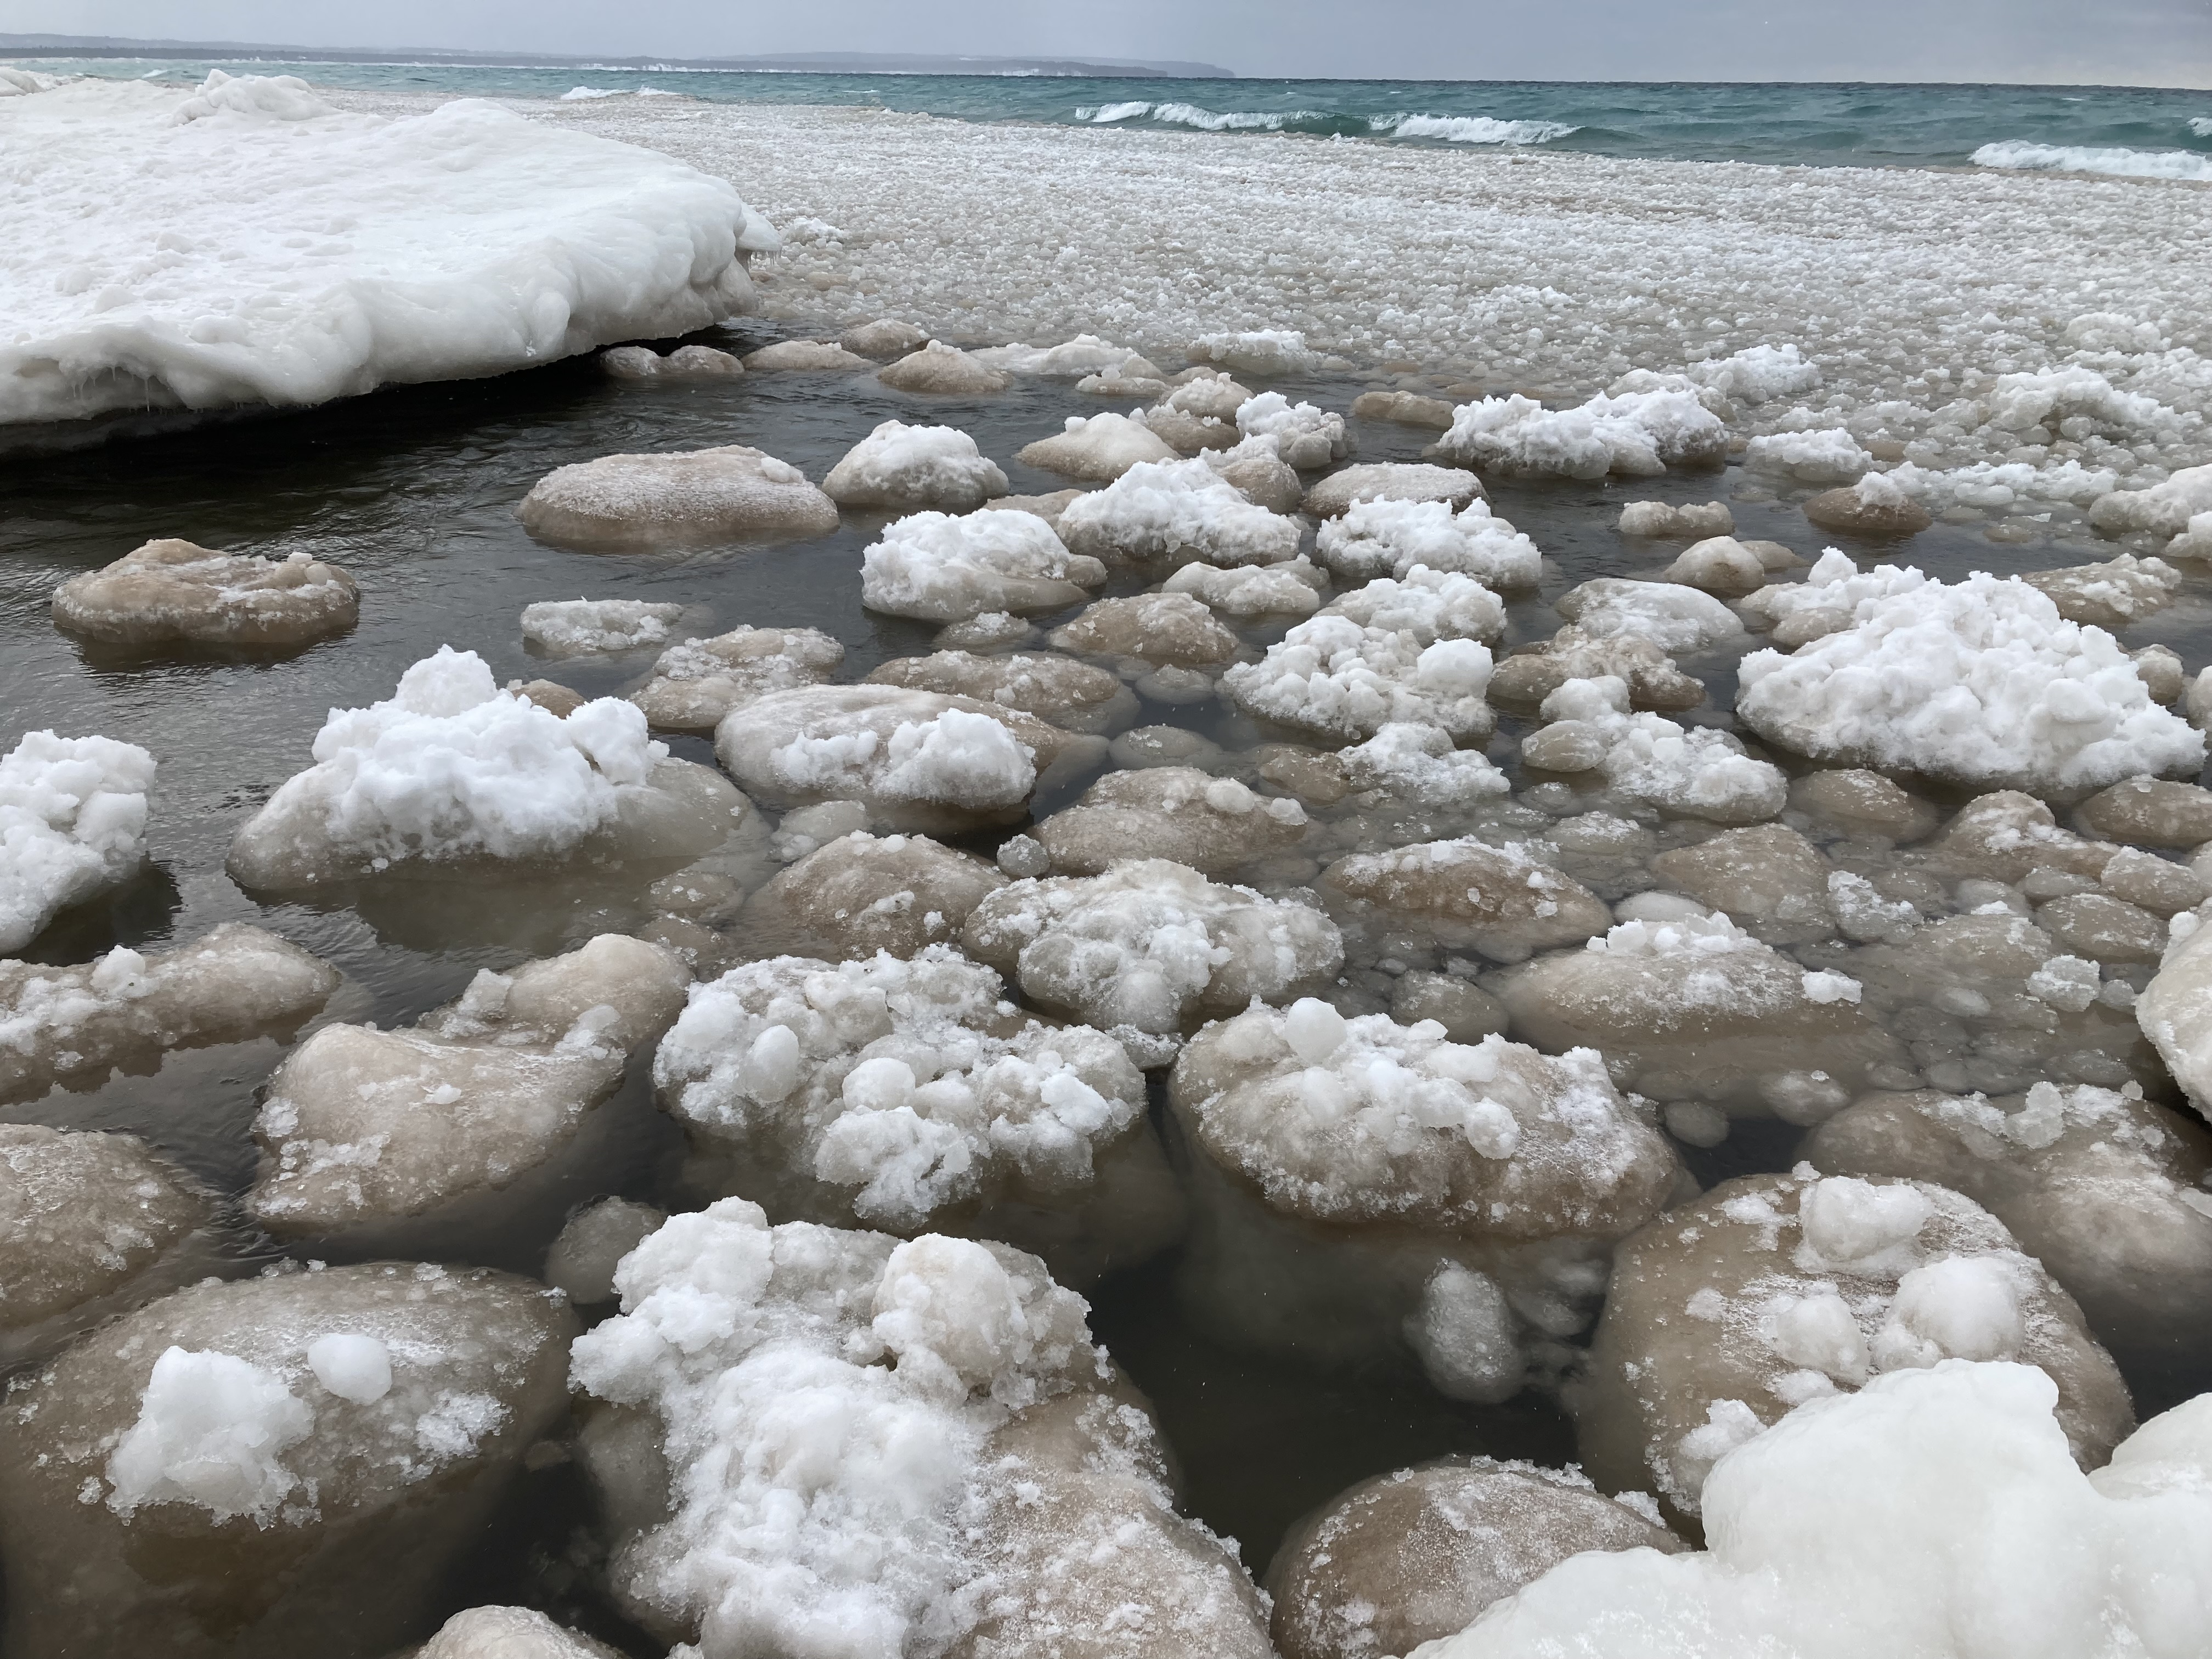 Ice Balls Form in Lake Michigan